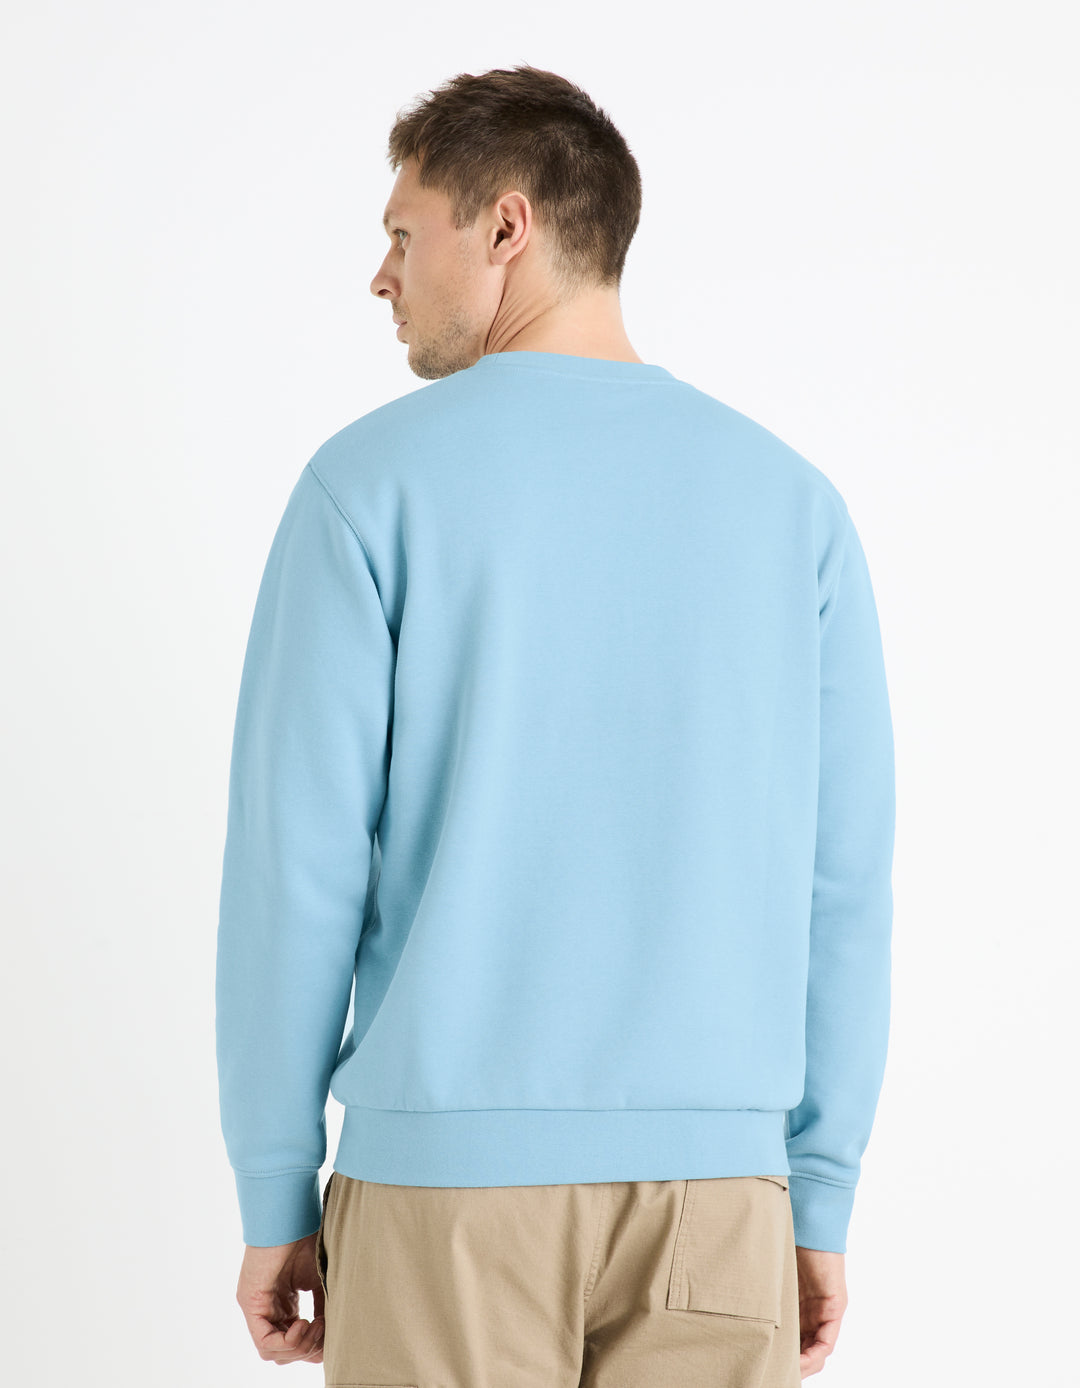  Sweatshirt Cotton Fleece Fabric / 58 Wide / 13.6 OZ Per  Yard/Sold by The Yard (Royal Blue)